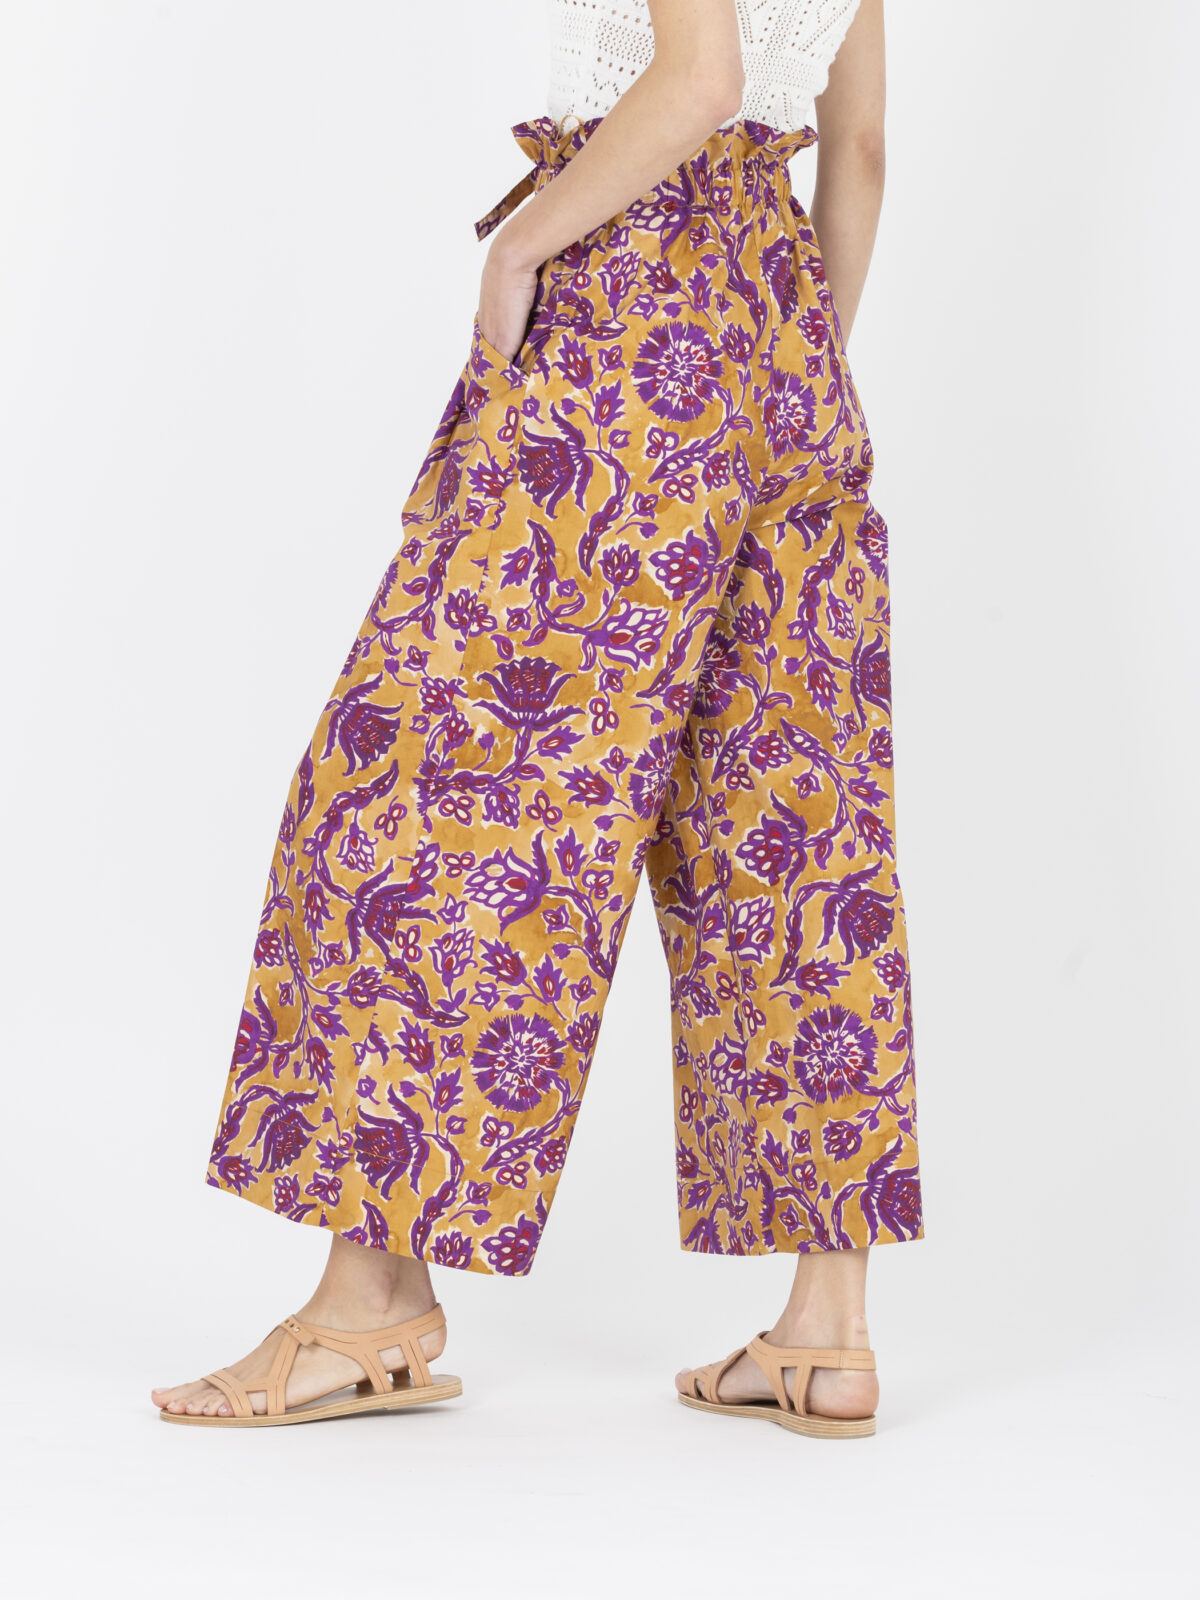 cesar-paper-pants-wide-legs-high-waist-safran-floral-cotton-poplin-vanessa-bruno-matchboxathens